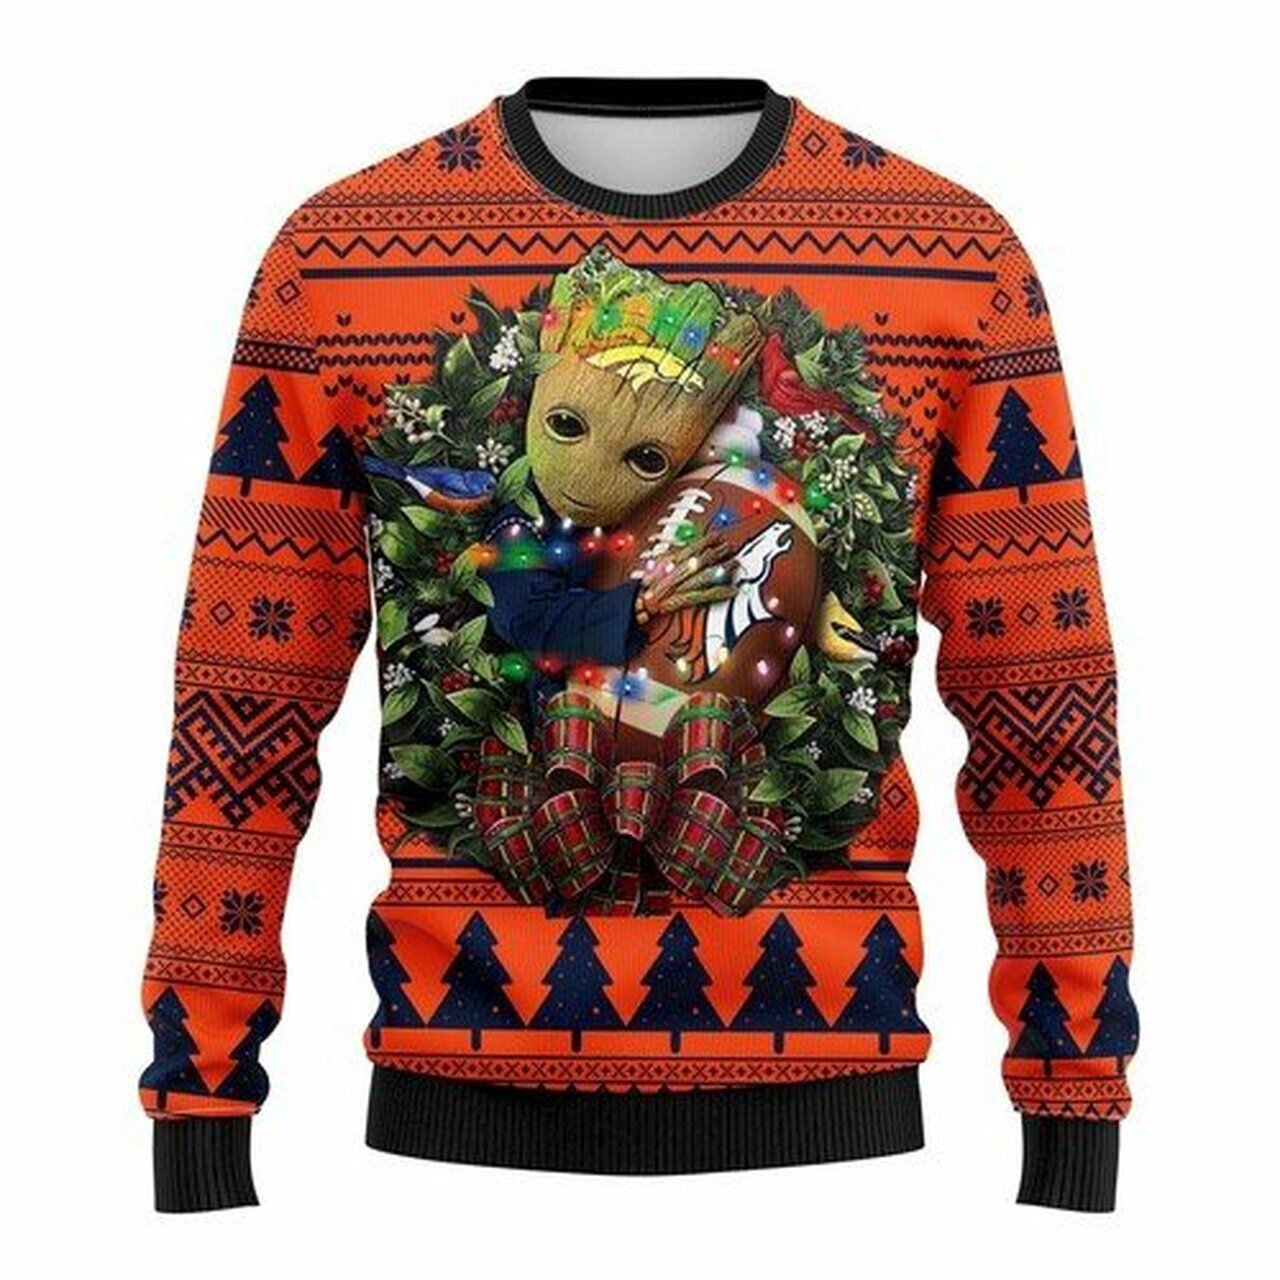 NFL Denver Brocos Groot hug ugly christmas sweater